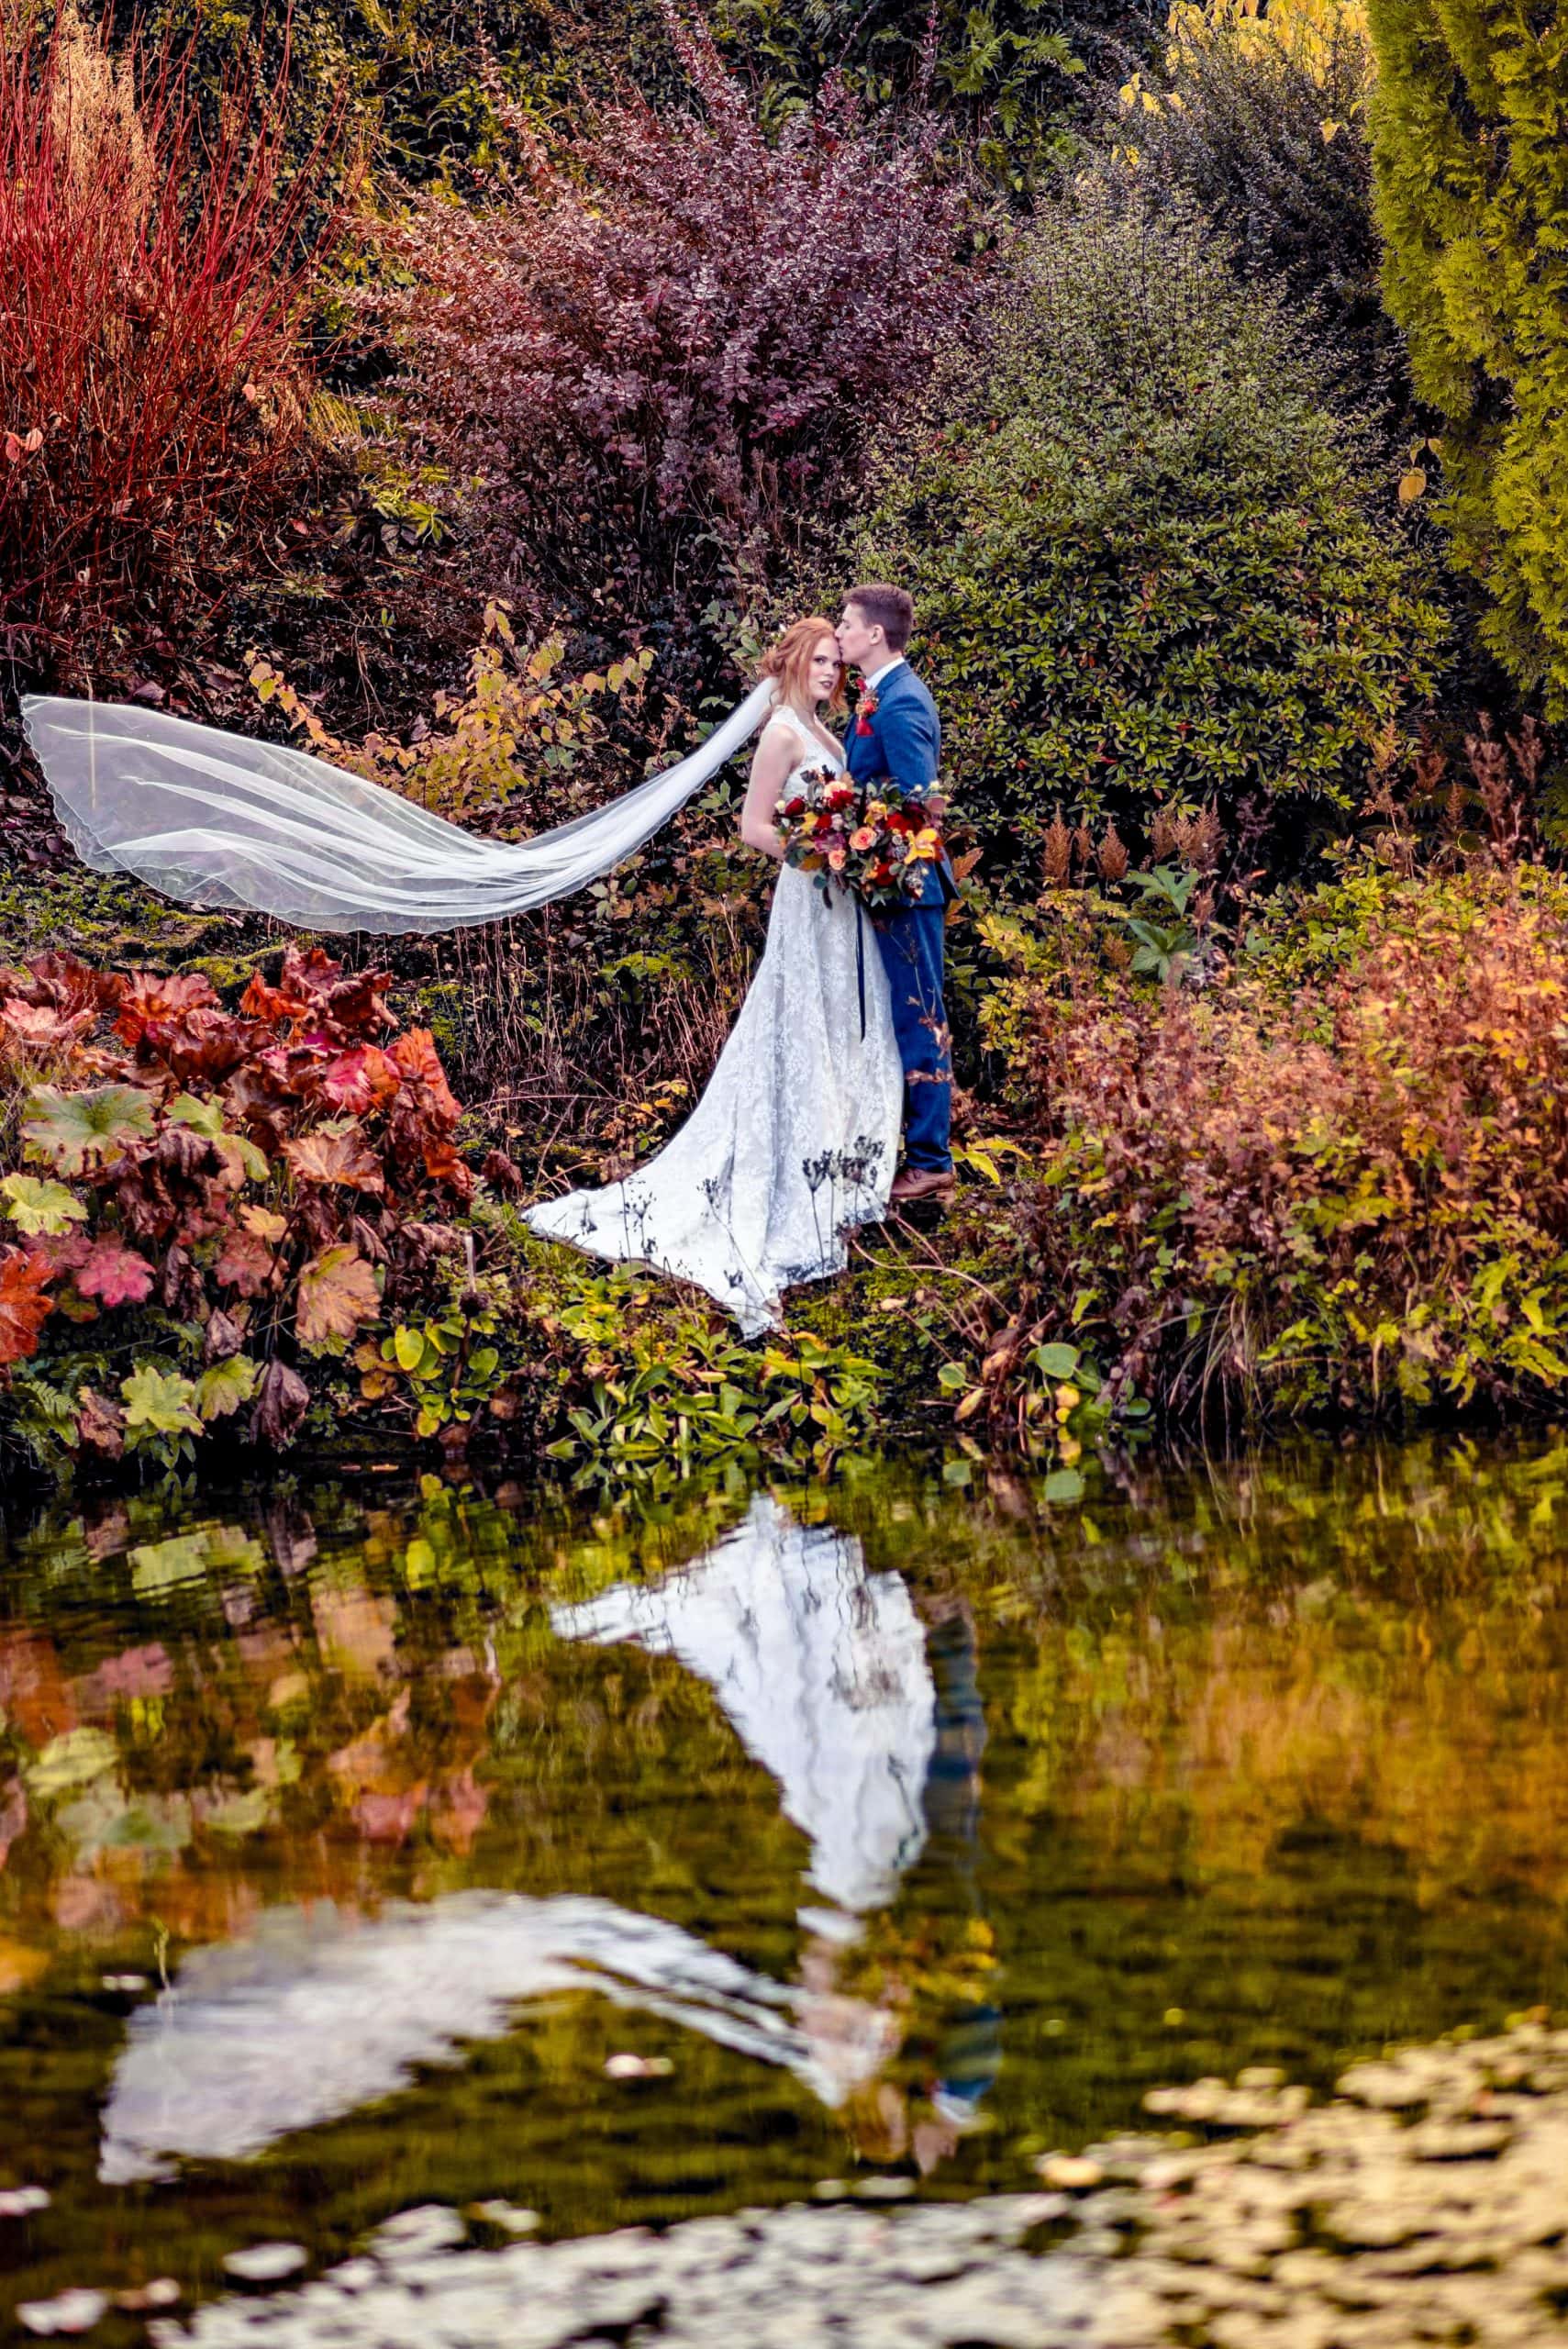 Reflective shot across the Autumnal themed lake of Barn at Upcote's fantastic secret garden.